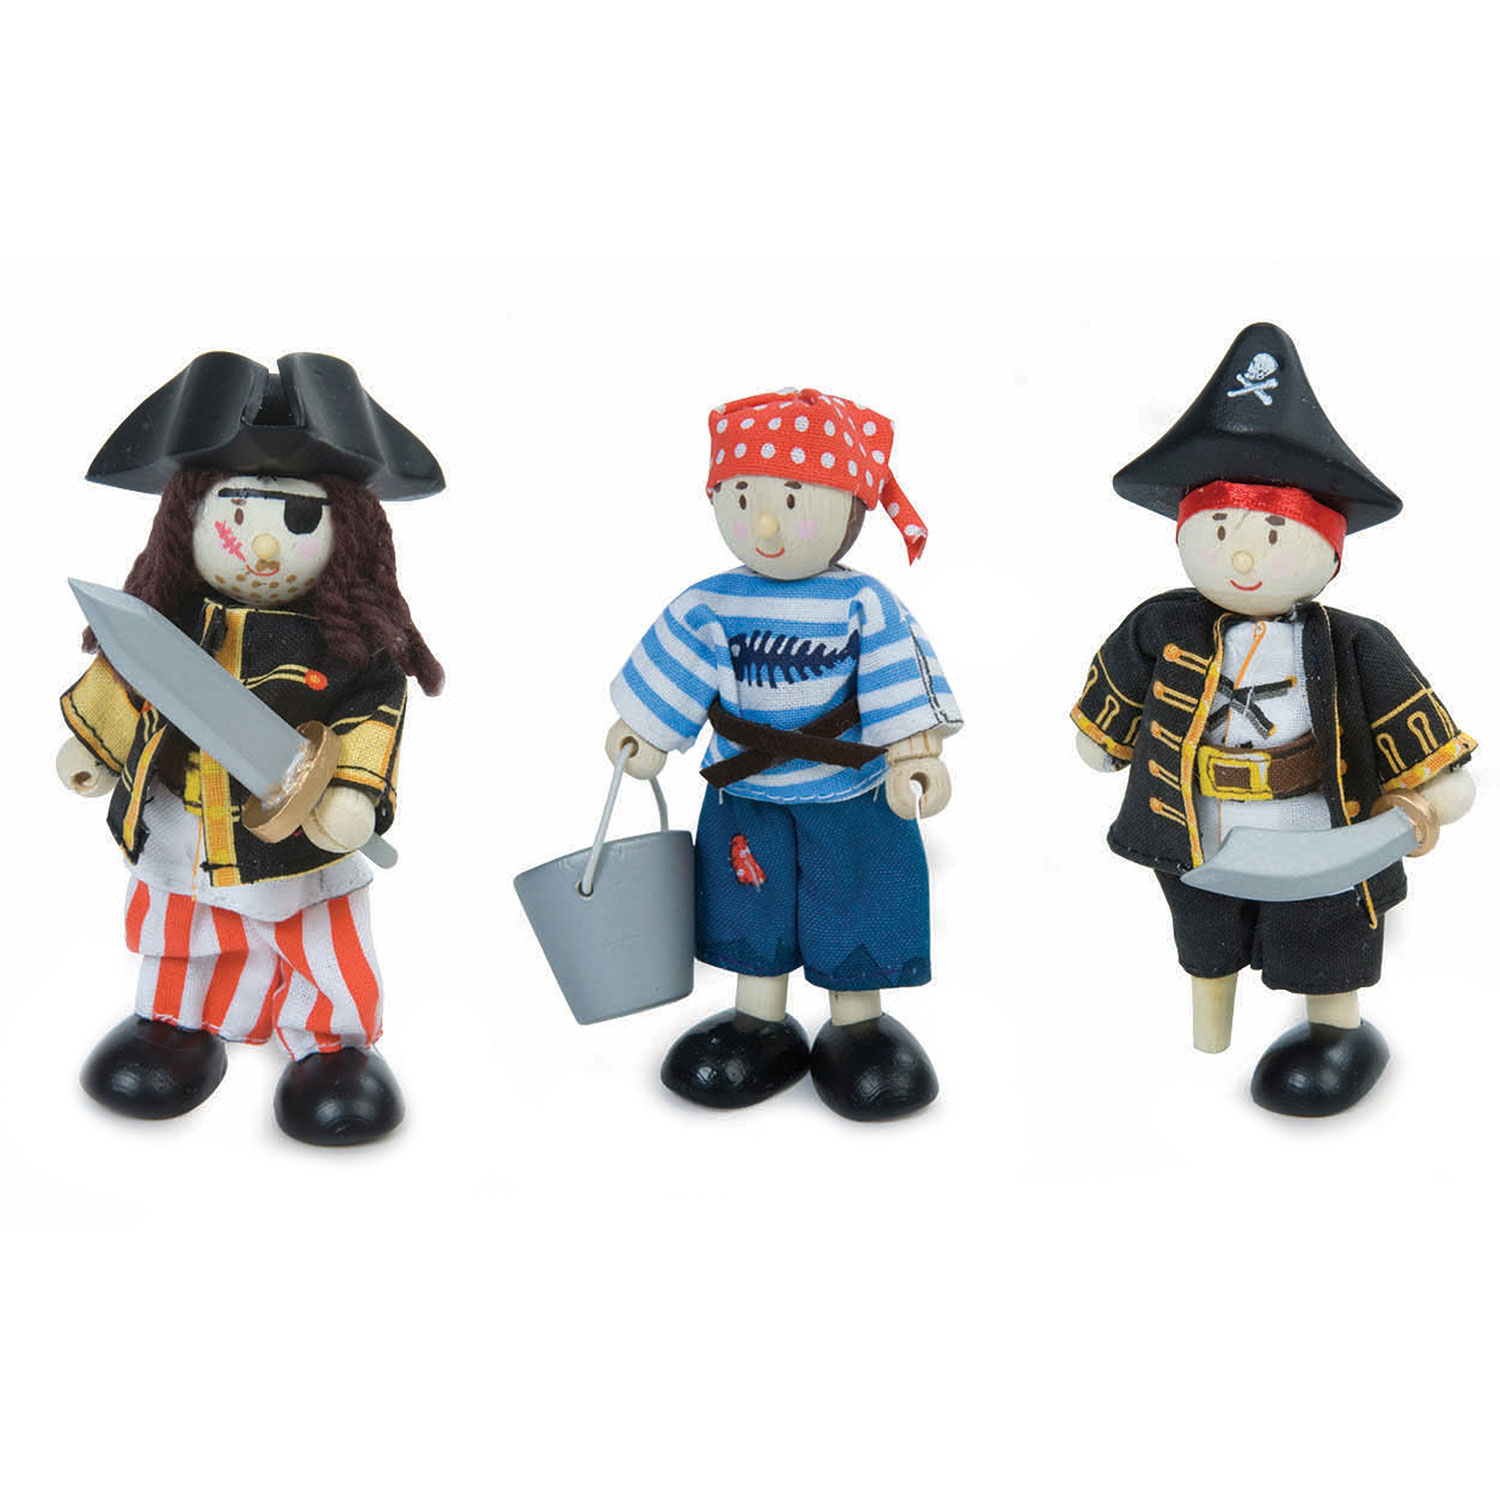 Piraten / Pirates Gift Pack